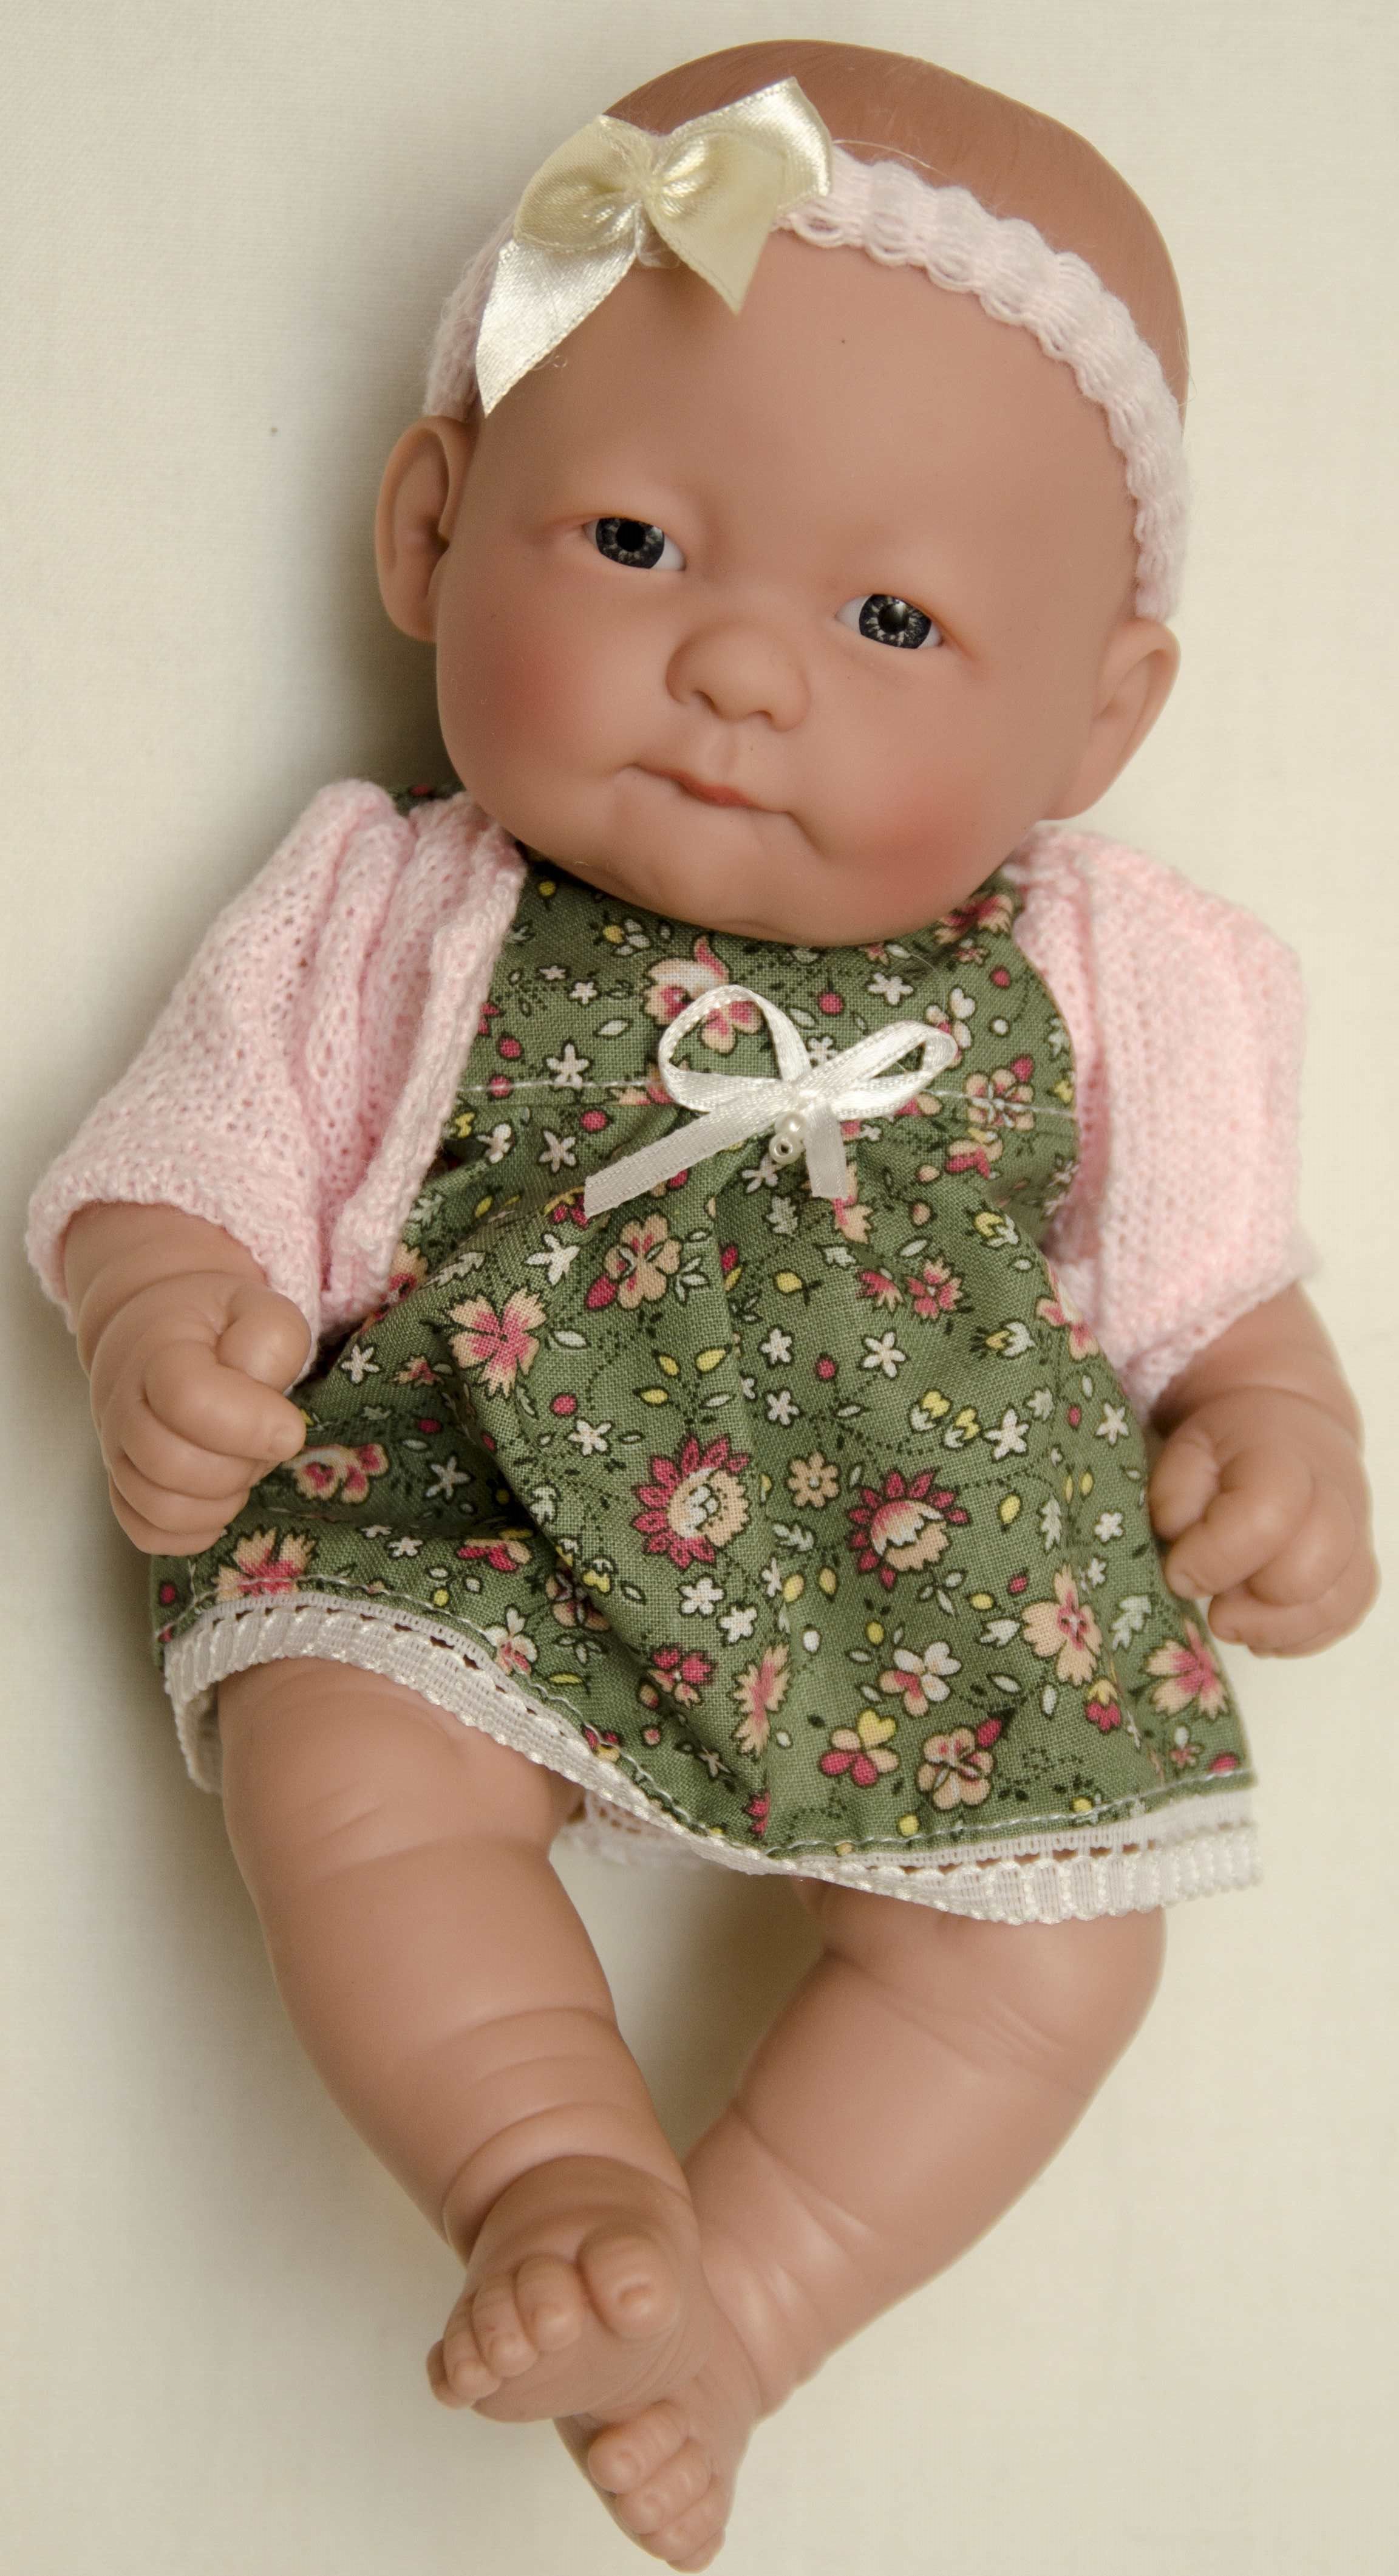 Realistická panenka holčička Rózinka firmy Guca ze Španělska - obrázek 1